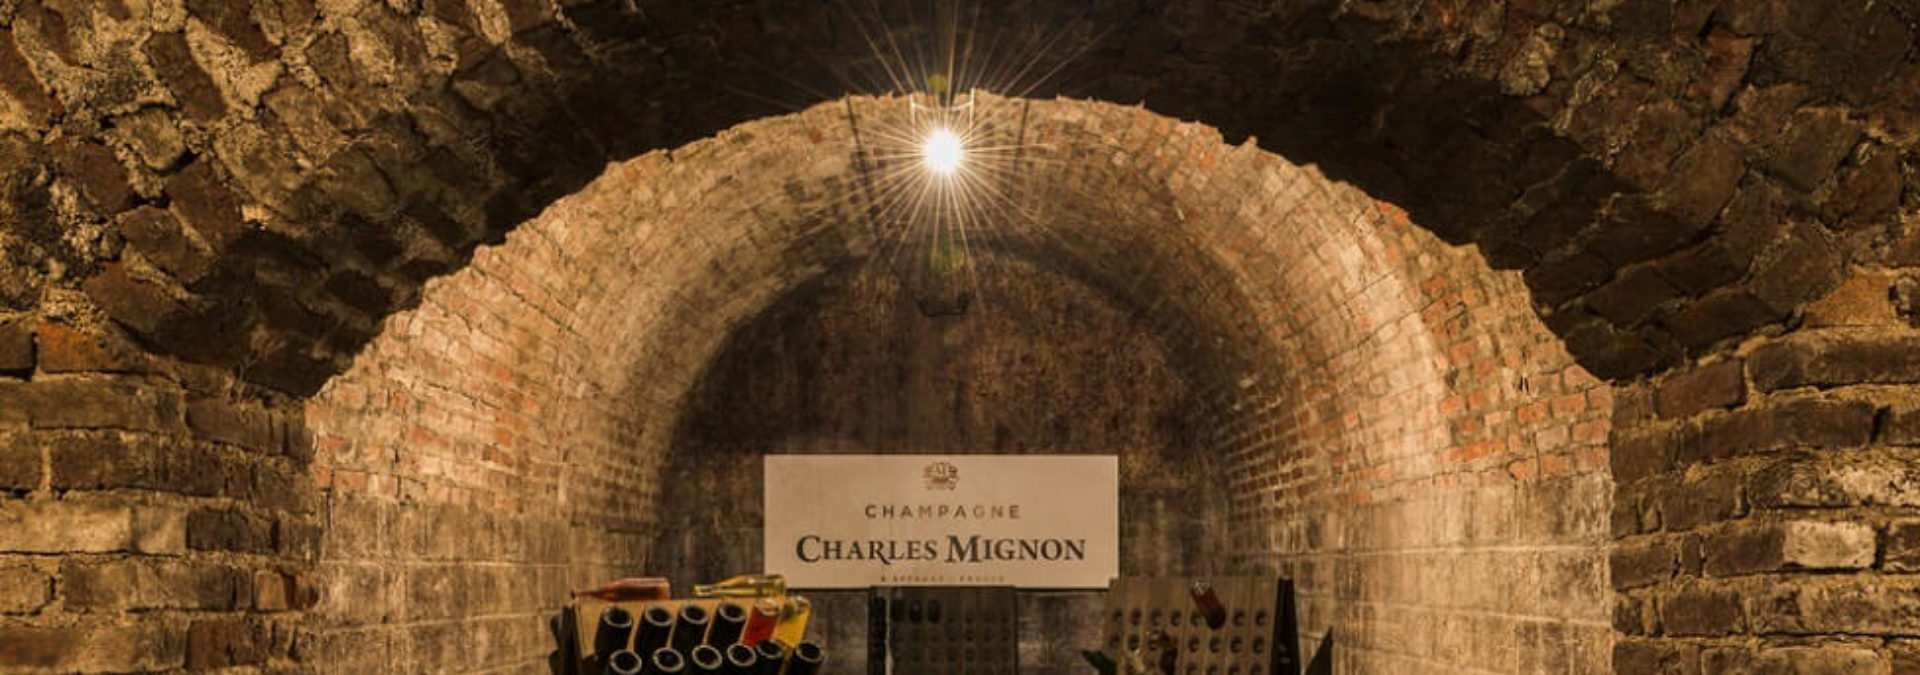 Champagne Charles Mignon